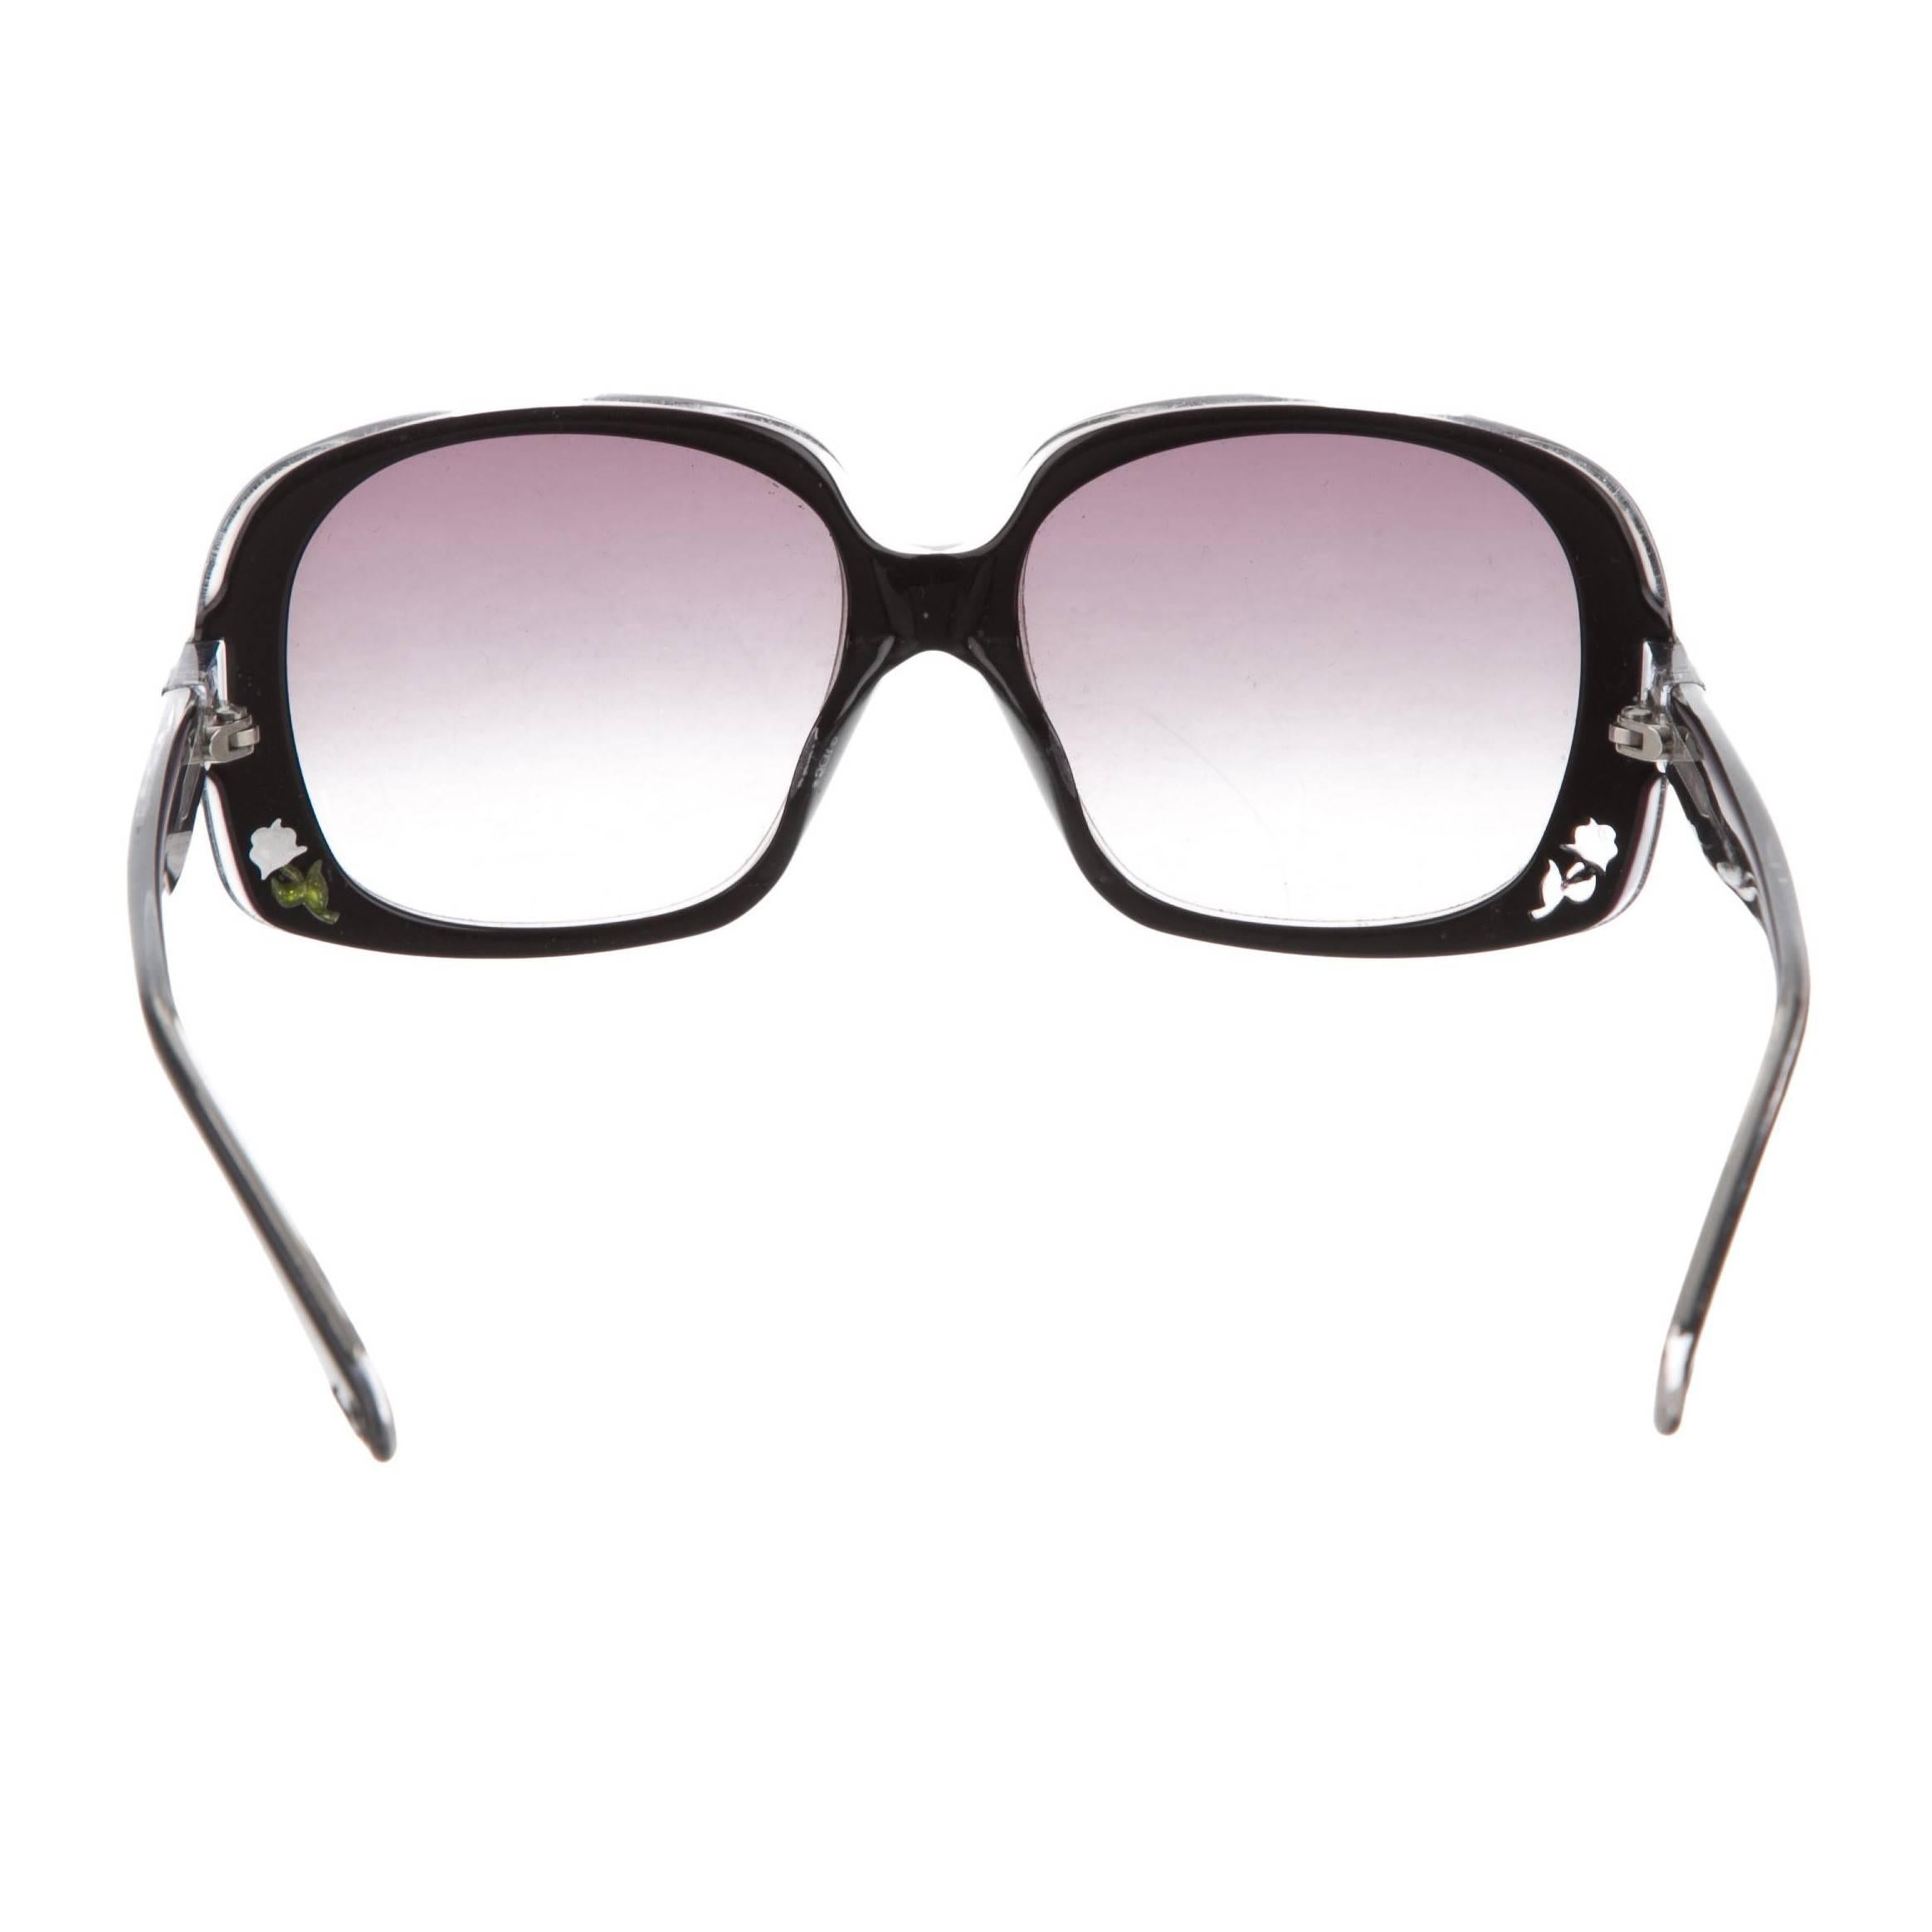 New Fendi Black Rose Inlaid Sunglasses with Case 1